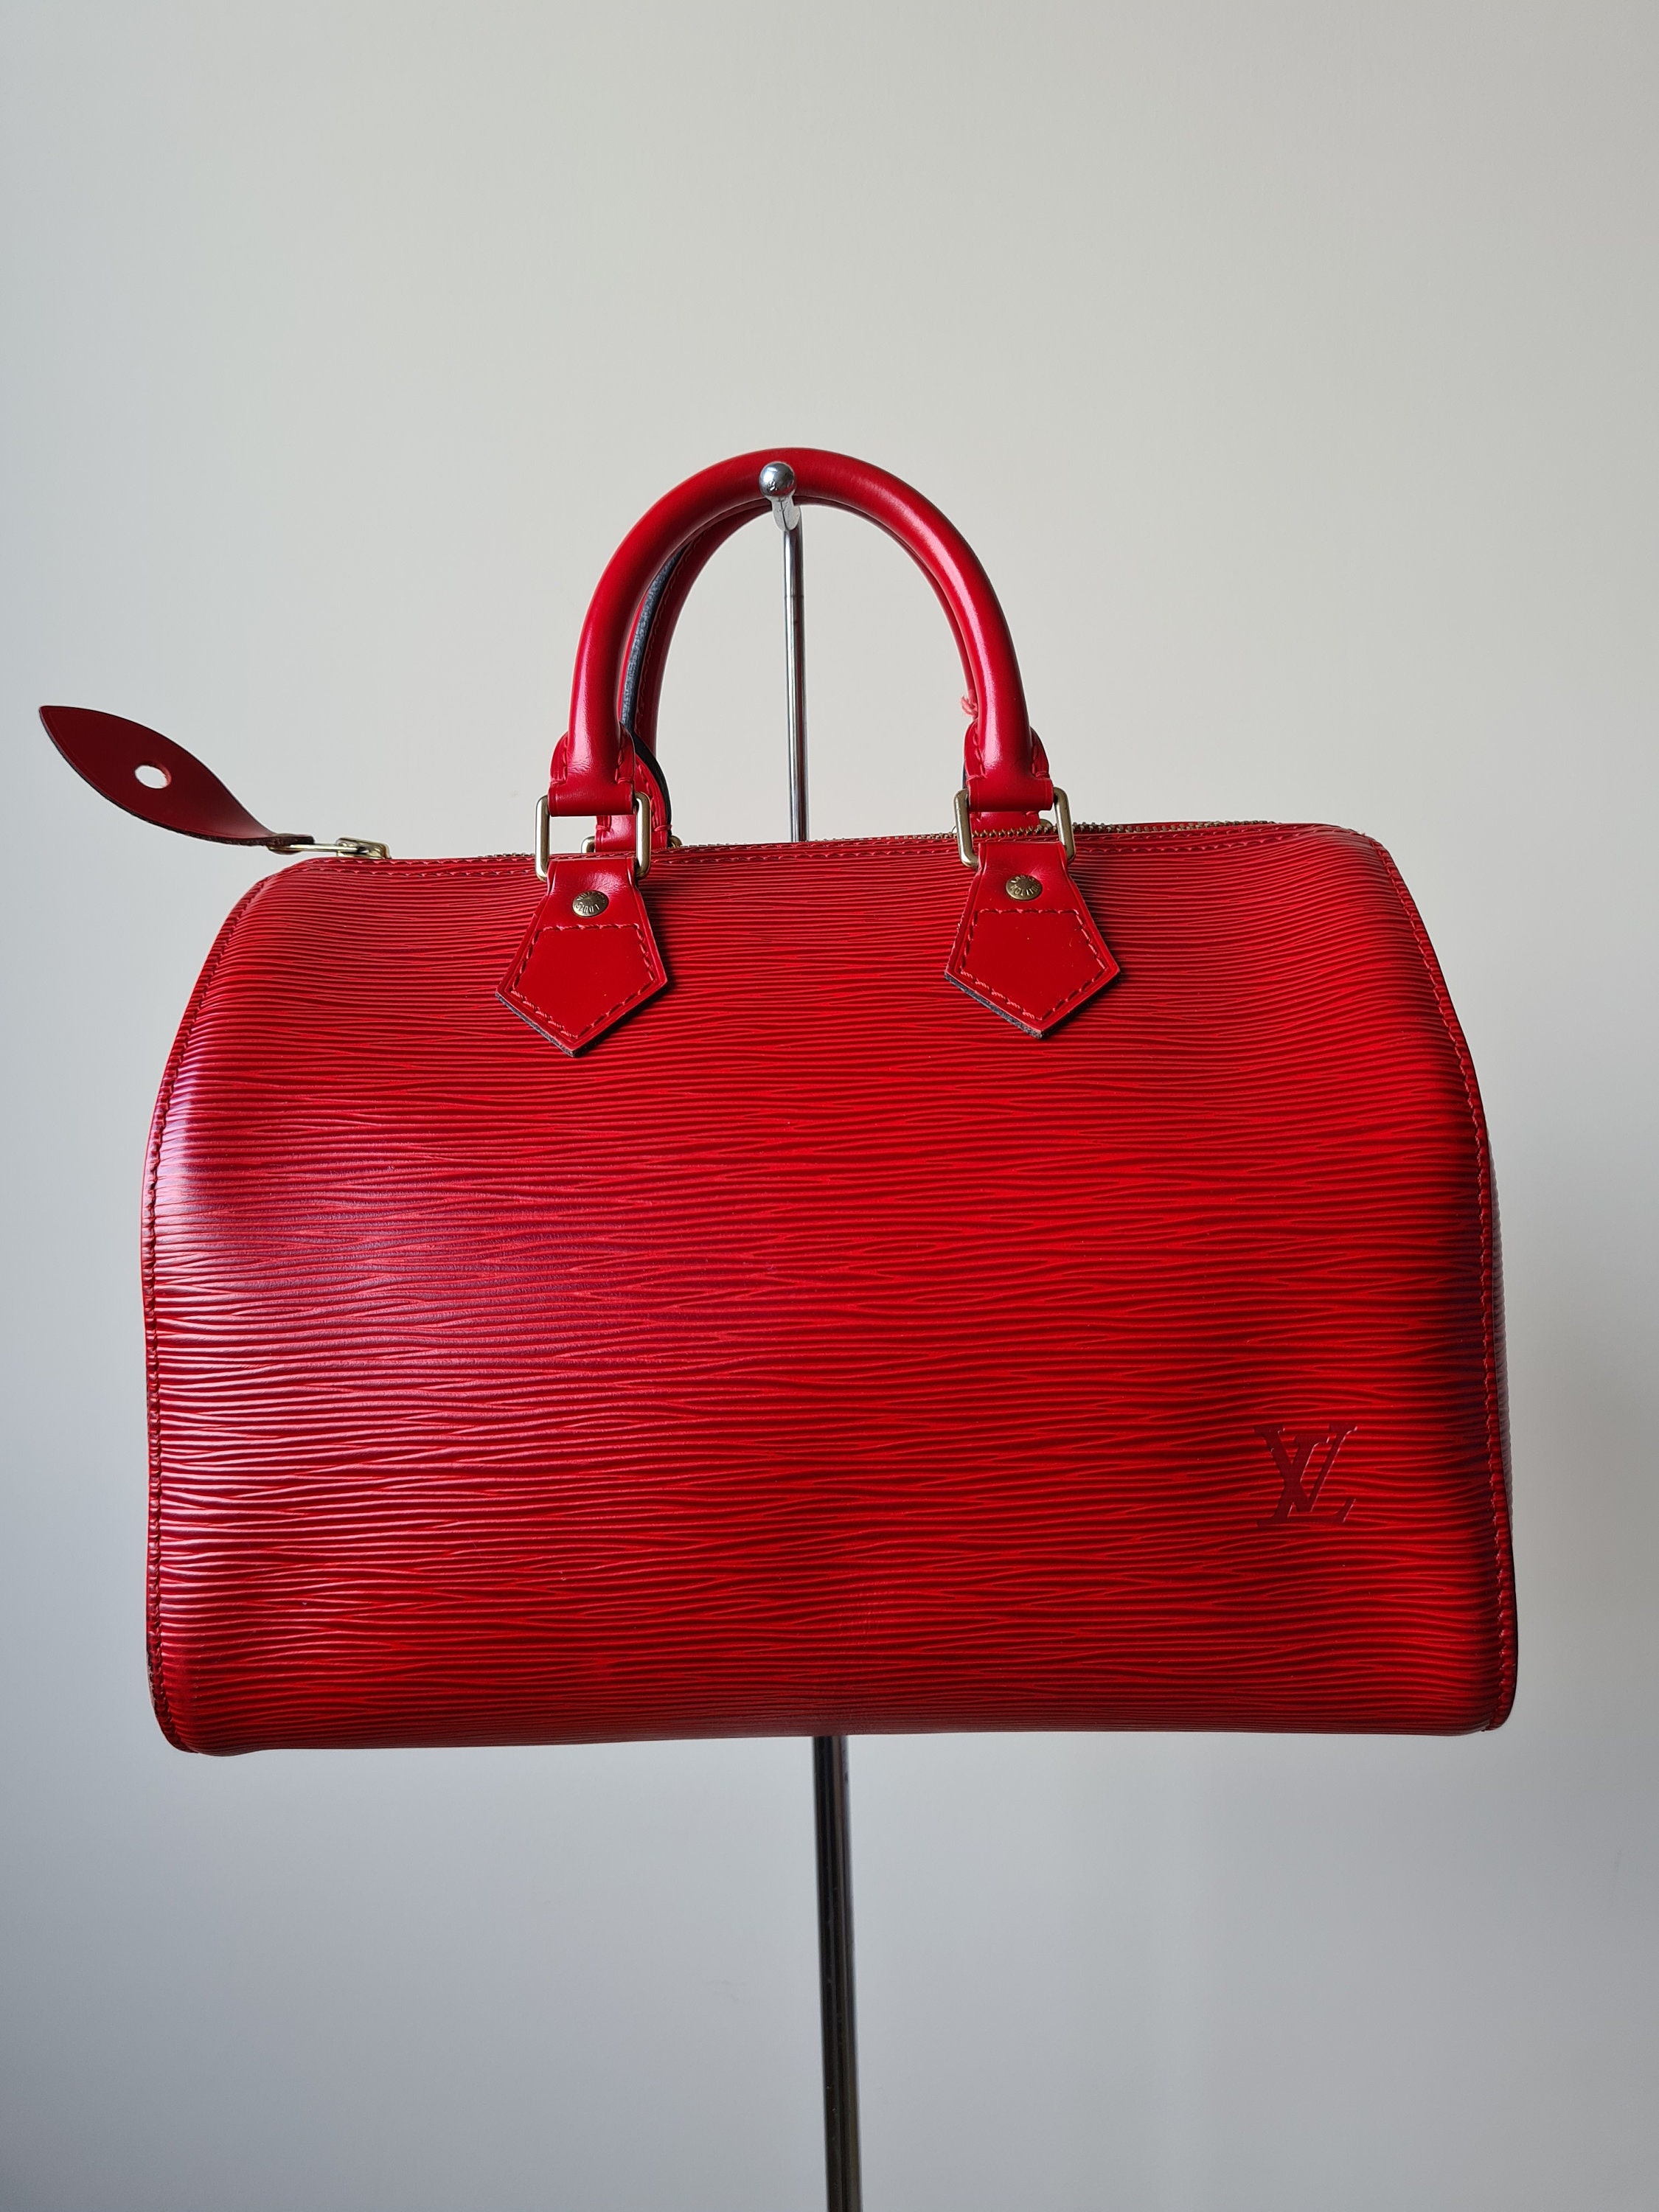 Vintage 1990s Louis VUITTON Red Leather Handbag 